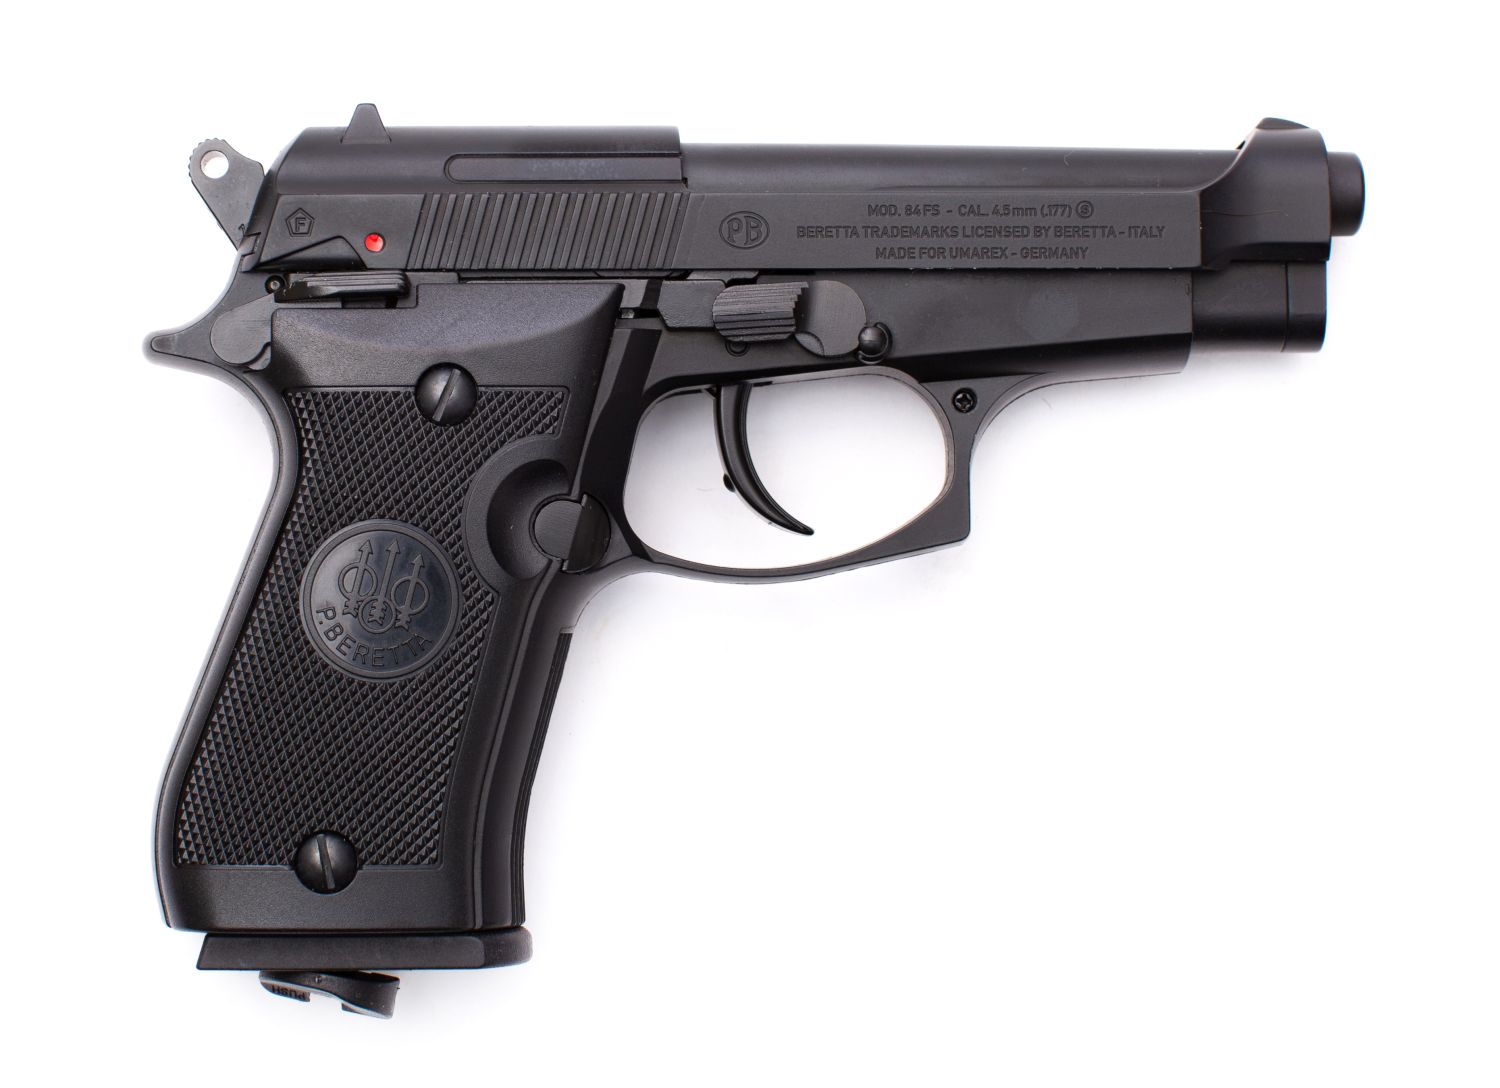 A Beretta M84 FS .